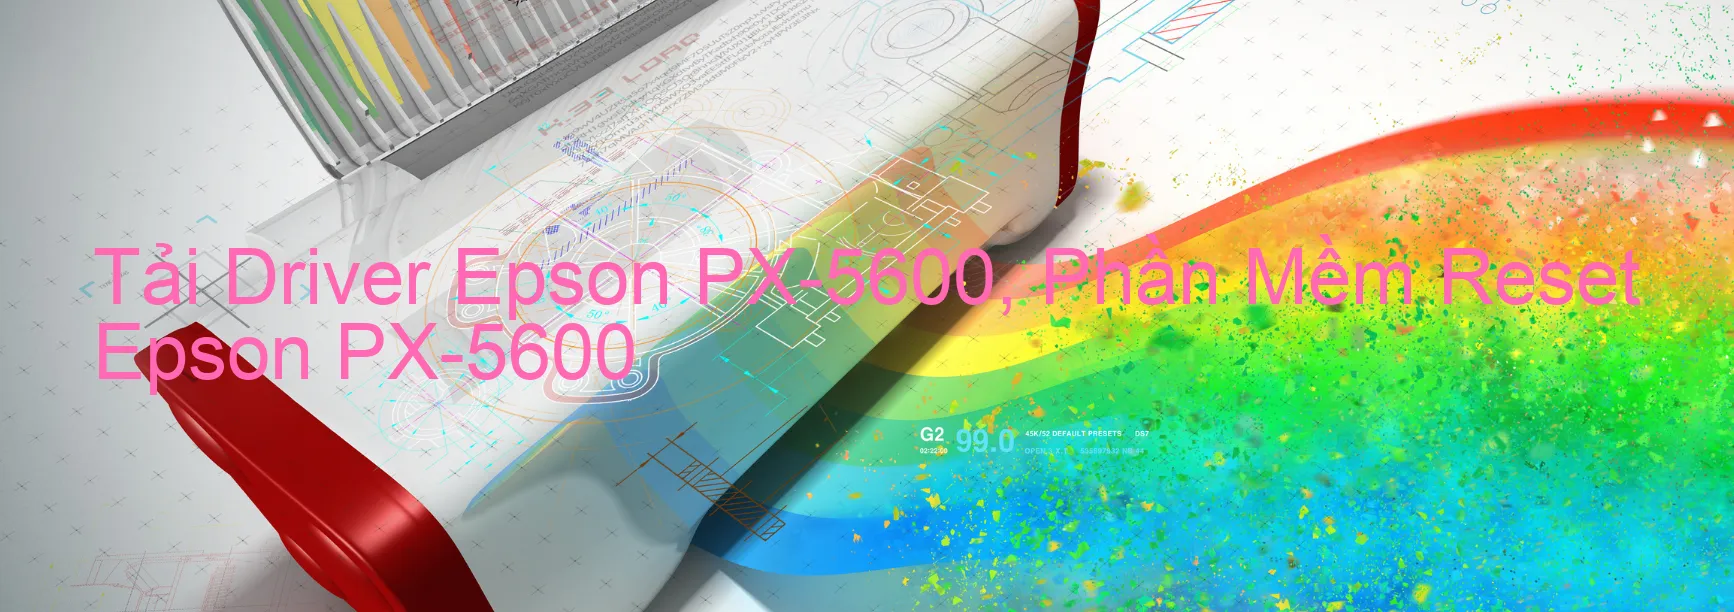 Driver Epson PX-5600, Phần Mềm Reset Epson PX-5600